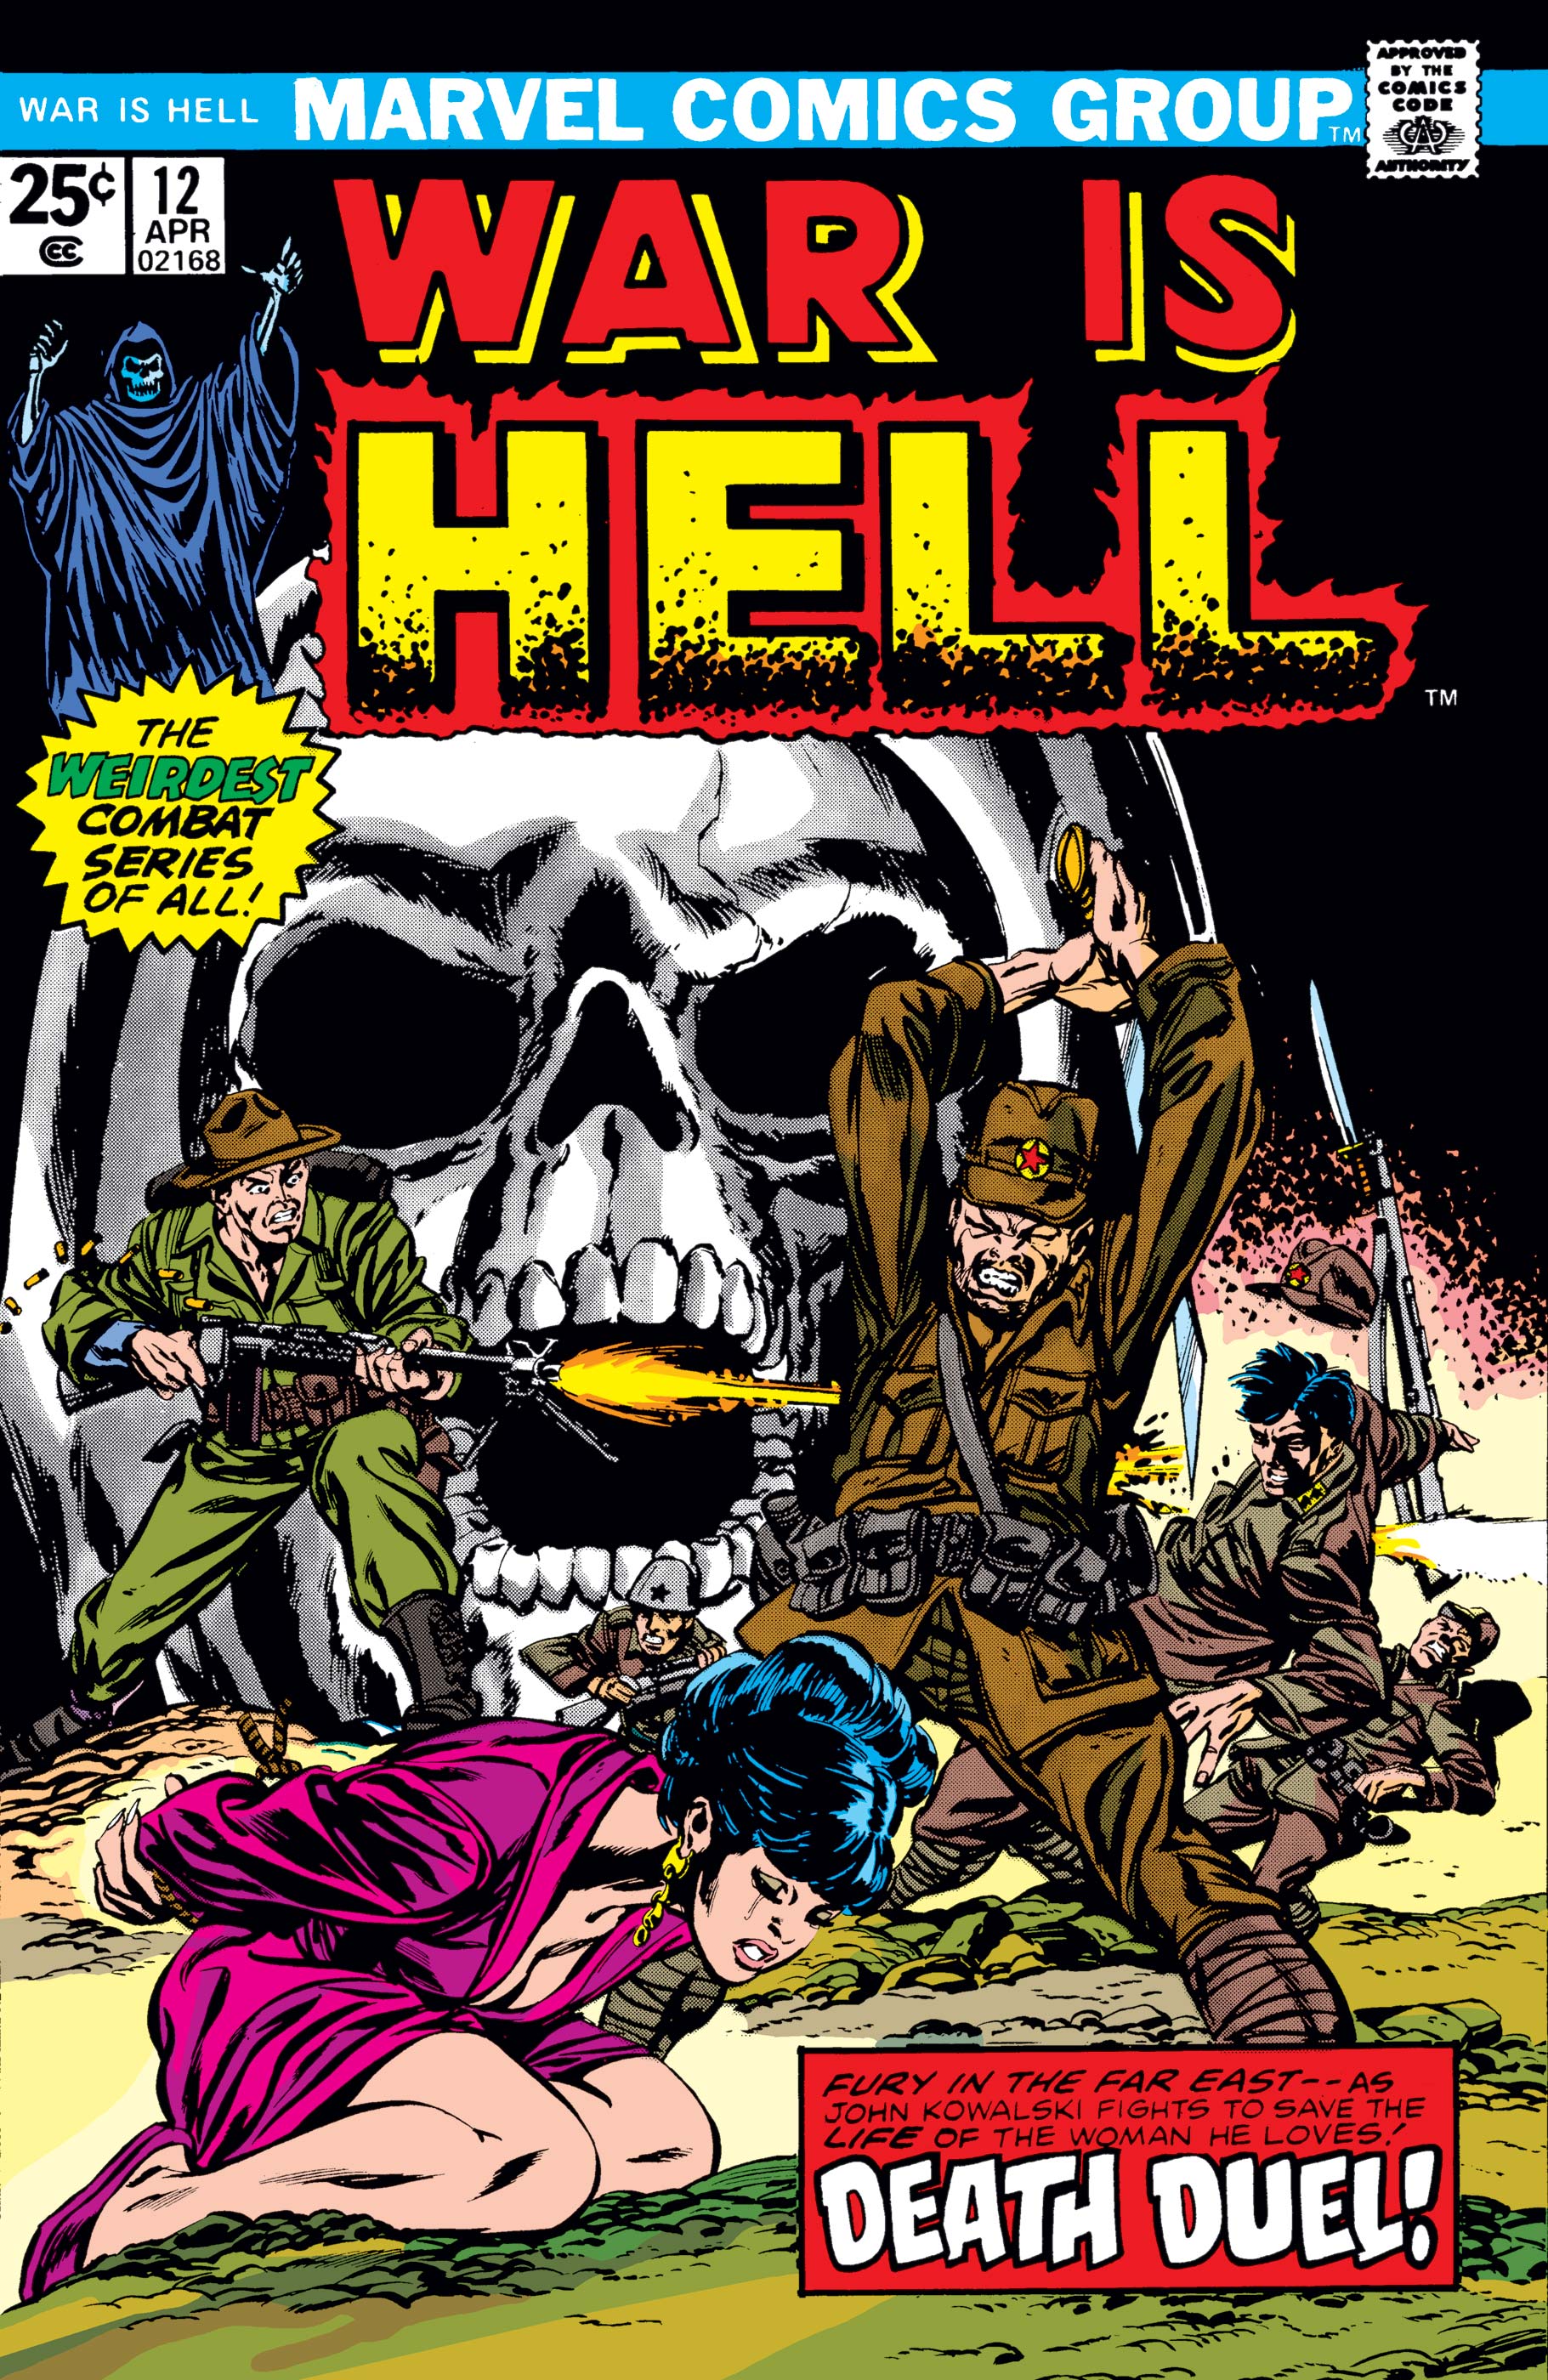 War Is Hell (1973) #12